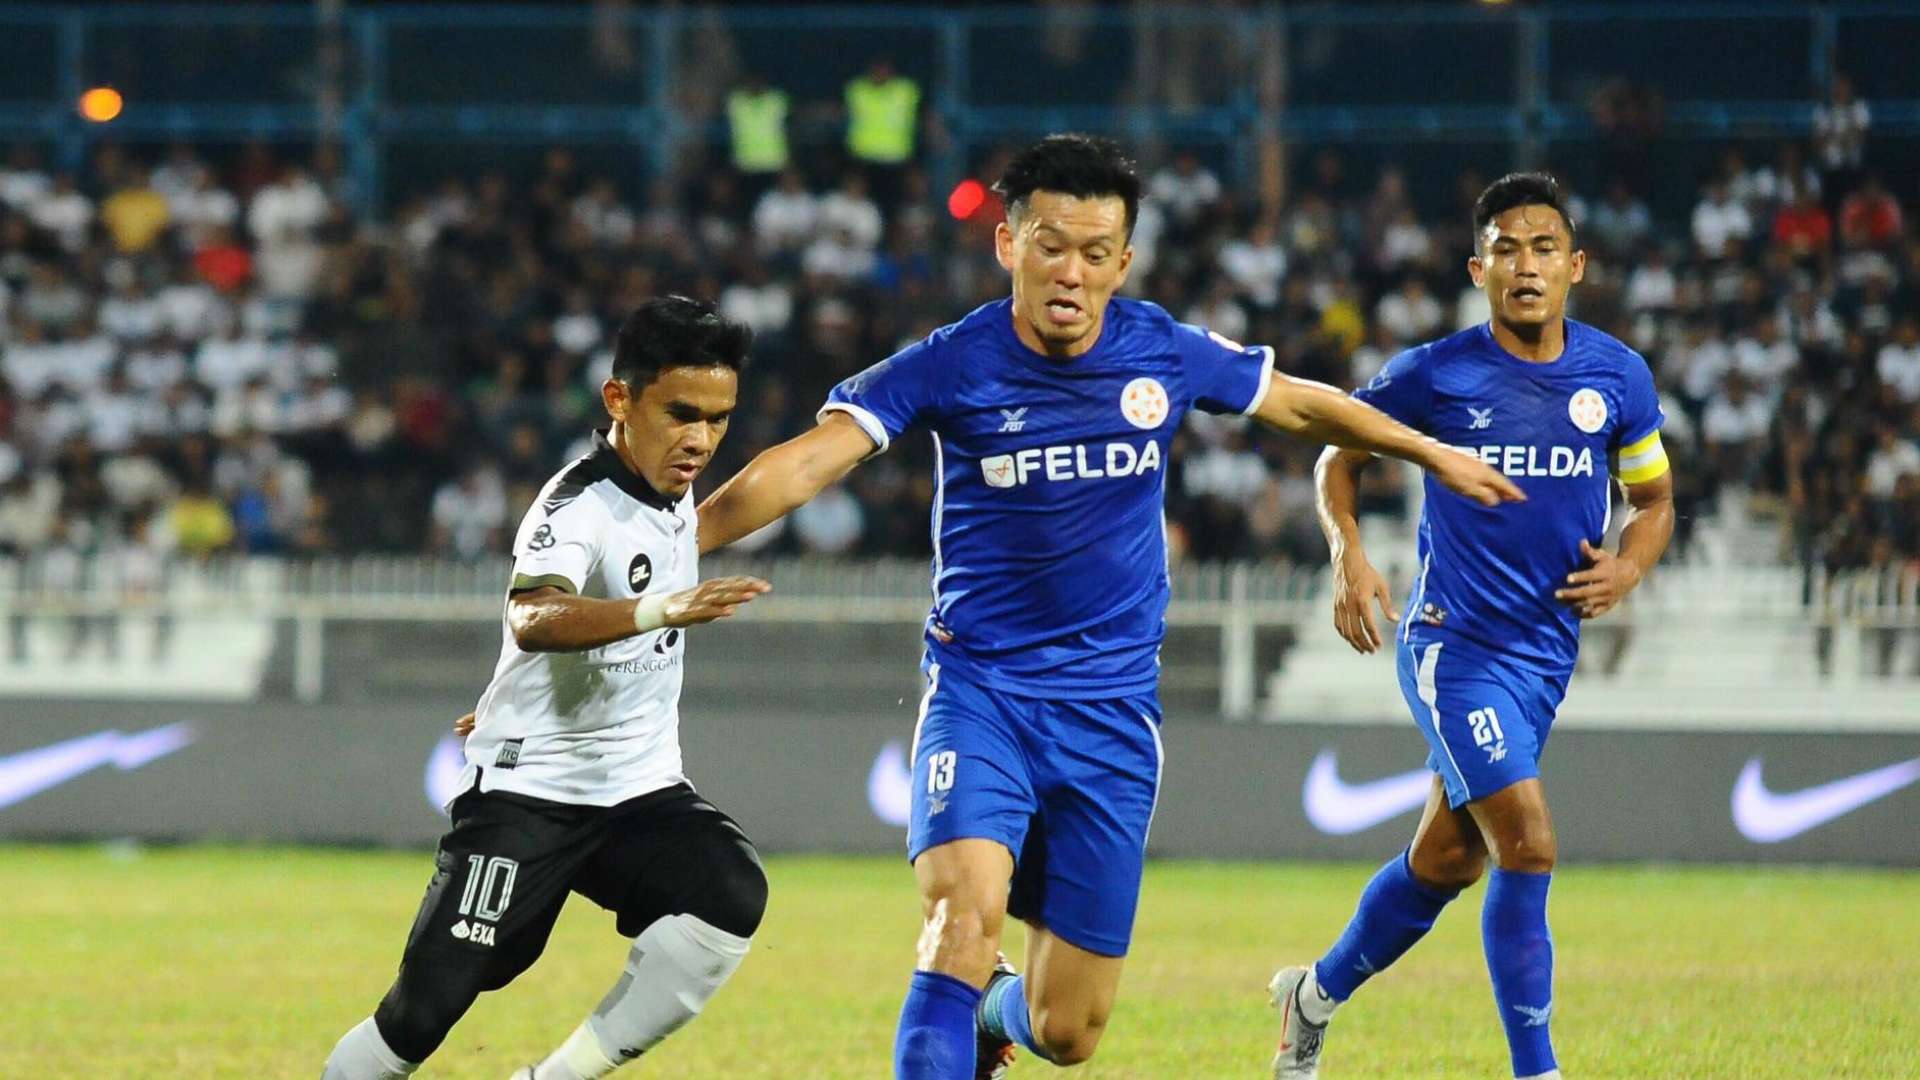 Masaki Watanabe, Terengganu FC v Felda United, Malaysia Super League, 19 Apr 2019